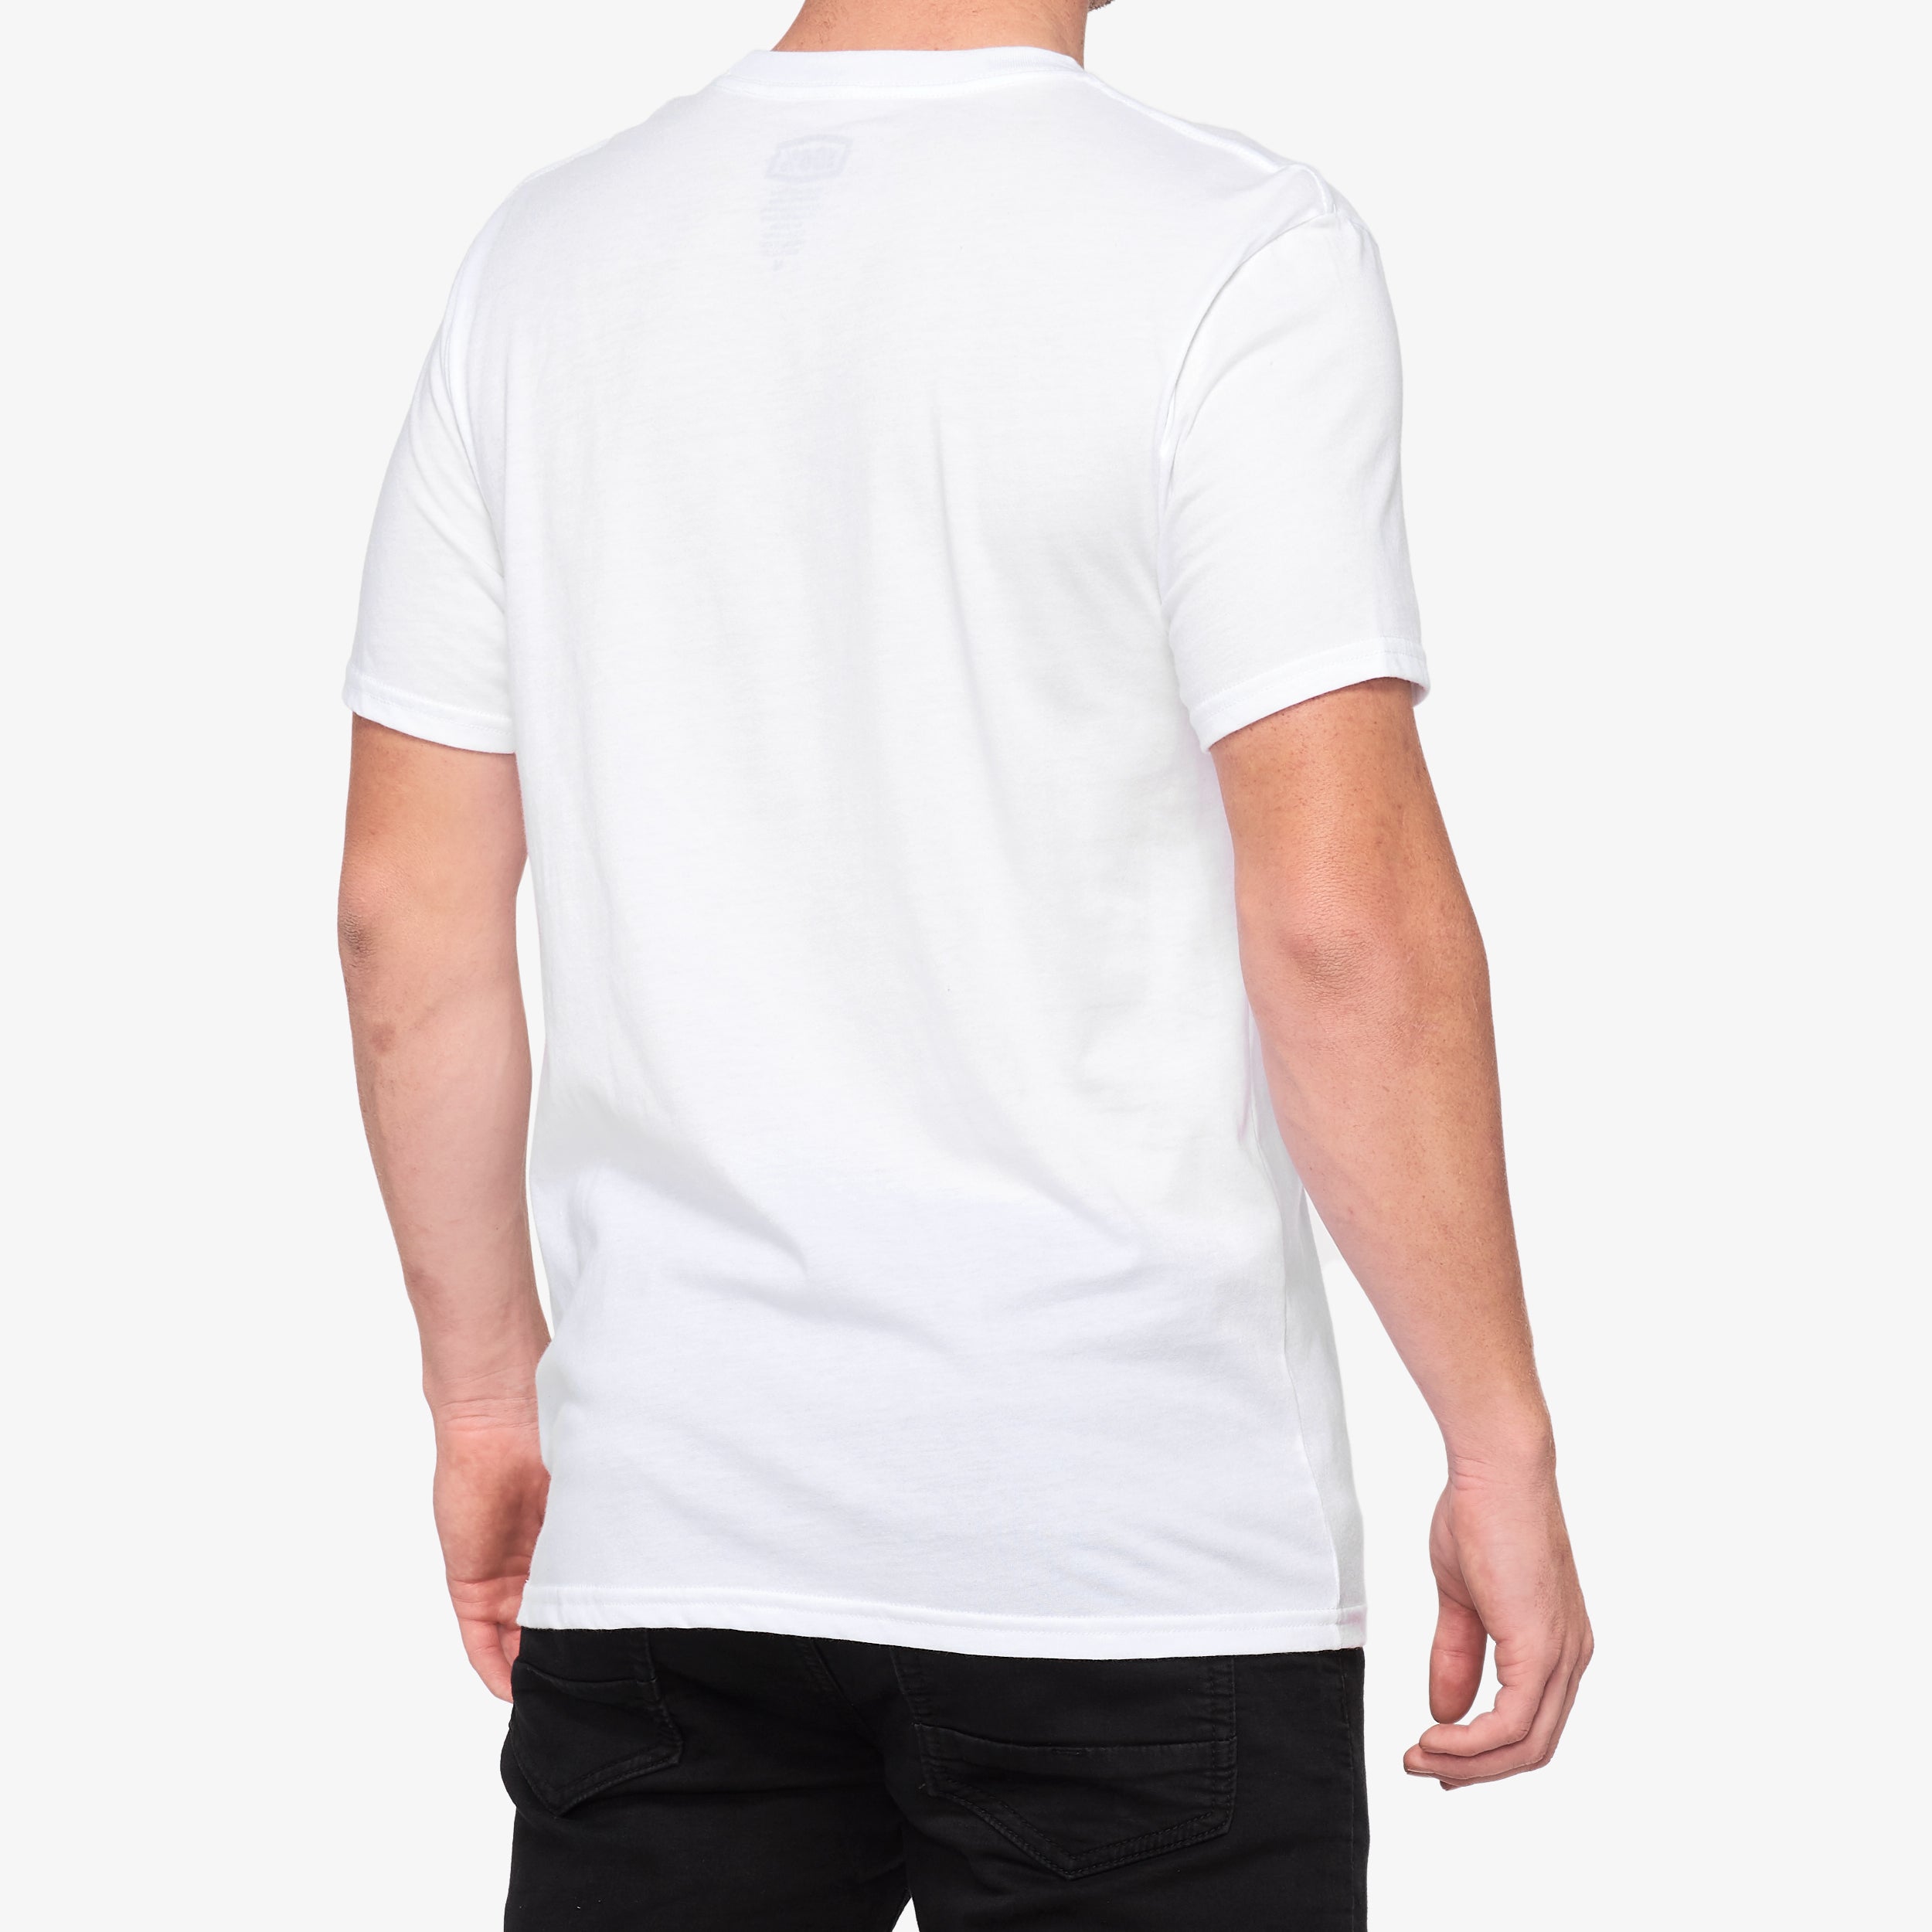 ESSENTIAL T-Shirt - White - Secondary